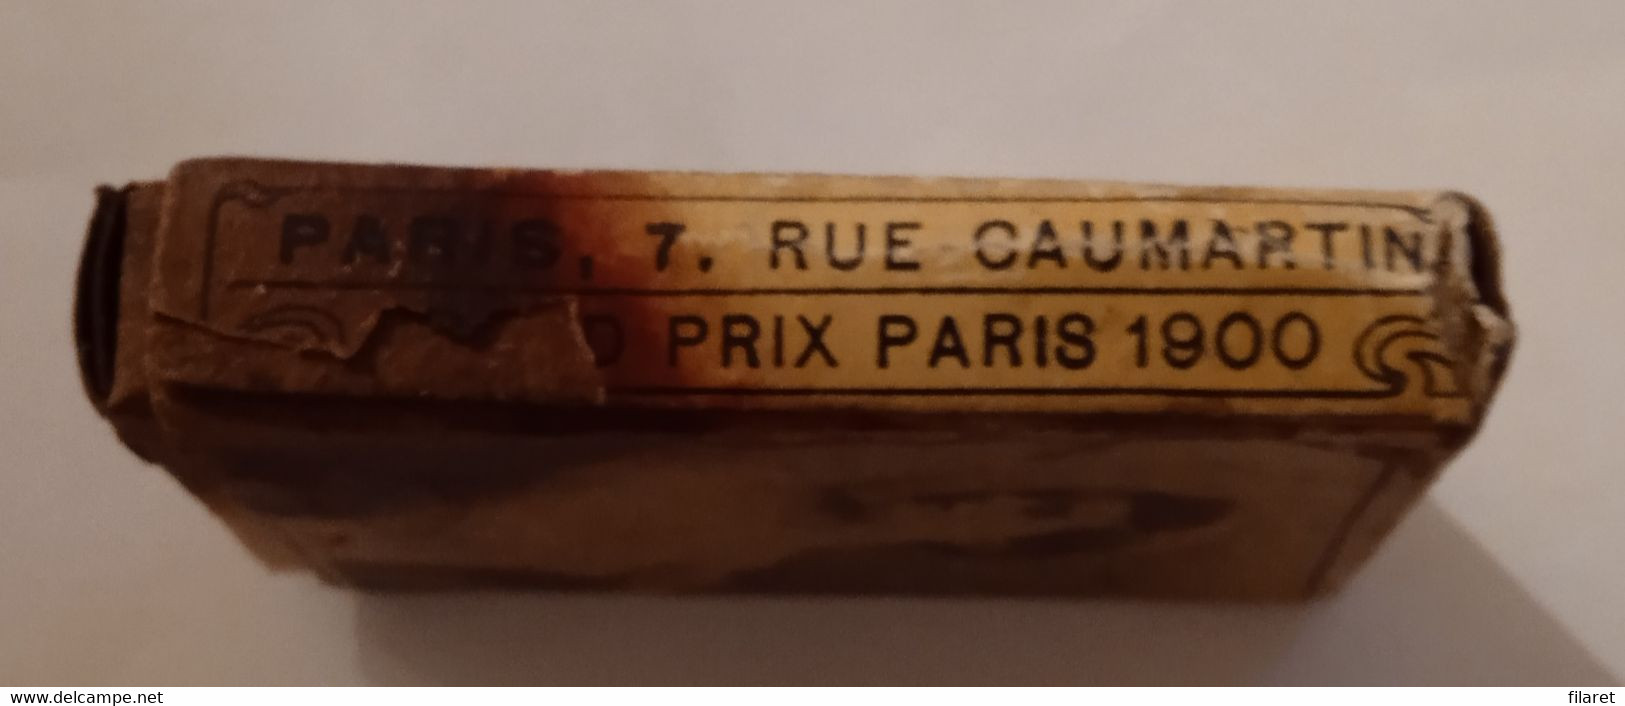 FRANCE,RUE CAUMARTIN,MARSEILLE,CAUSSEMILLE J Ne & C Le,GRAND PRIX 1900,EXPO.UNIVERSELLE - Boites D'allumettes